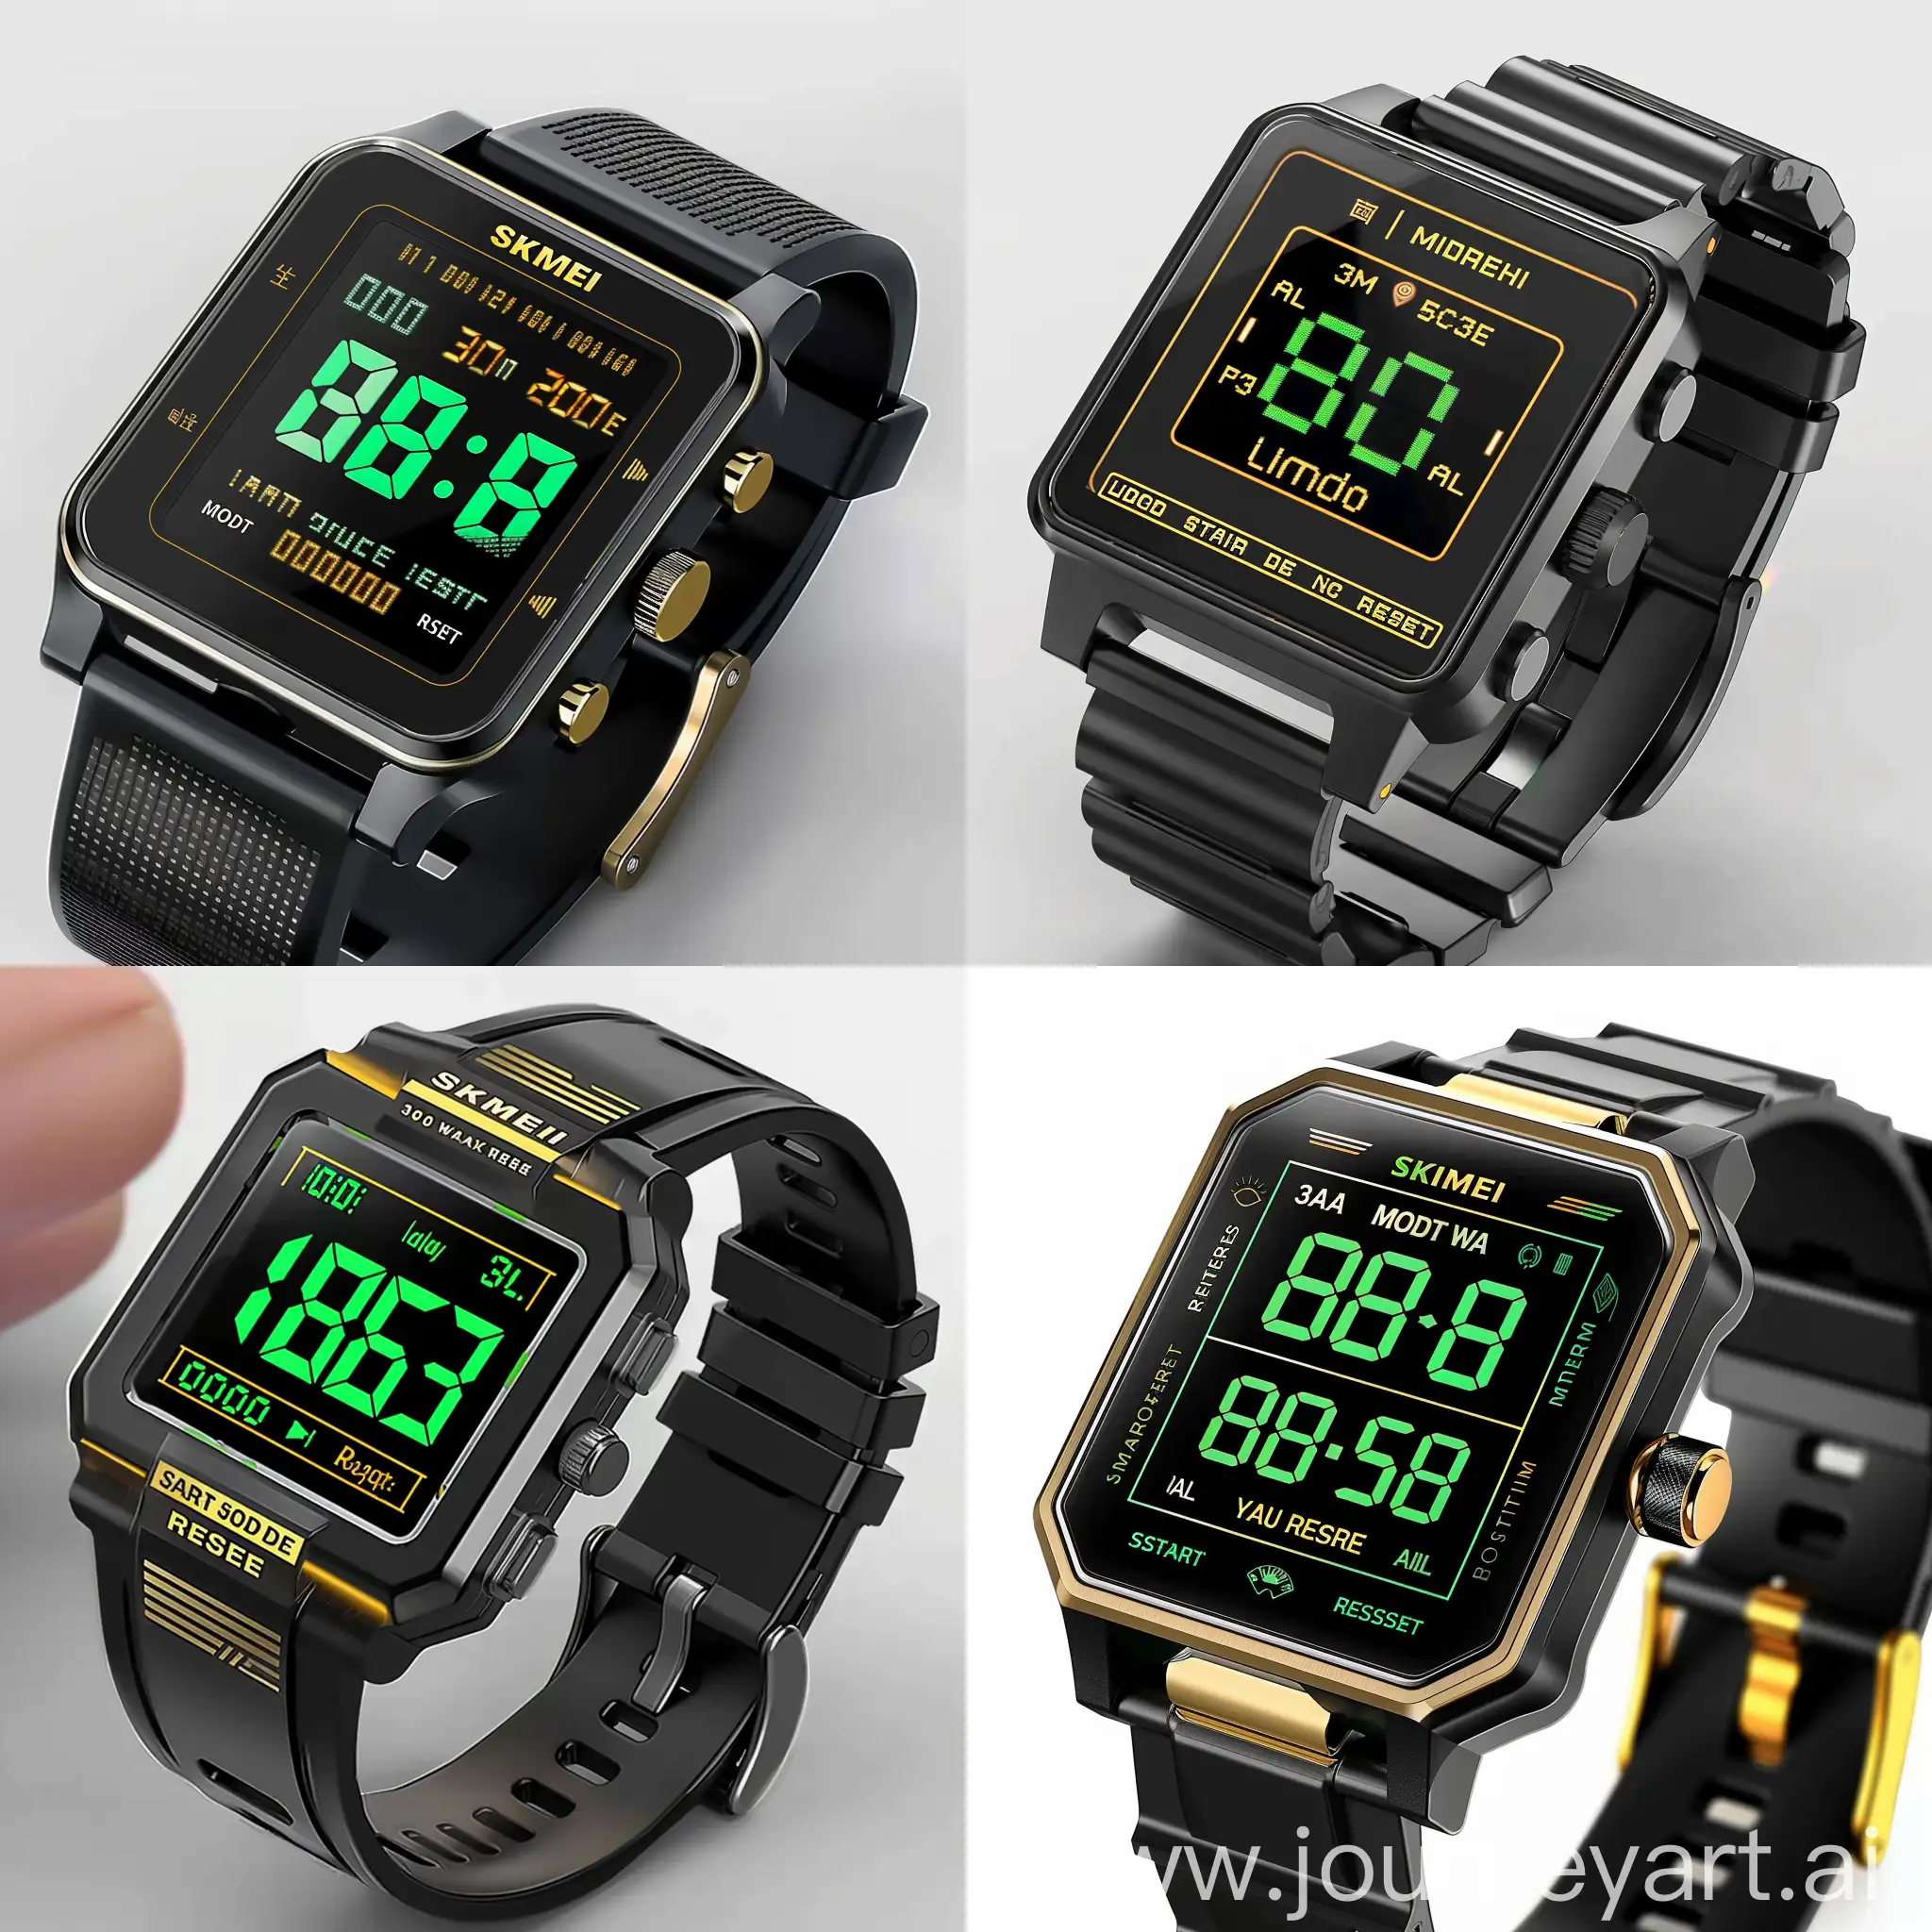 SKMEI-Digital-Wristwatch-with-Green-Display-and-Metallic-Finish